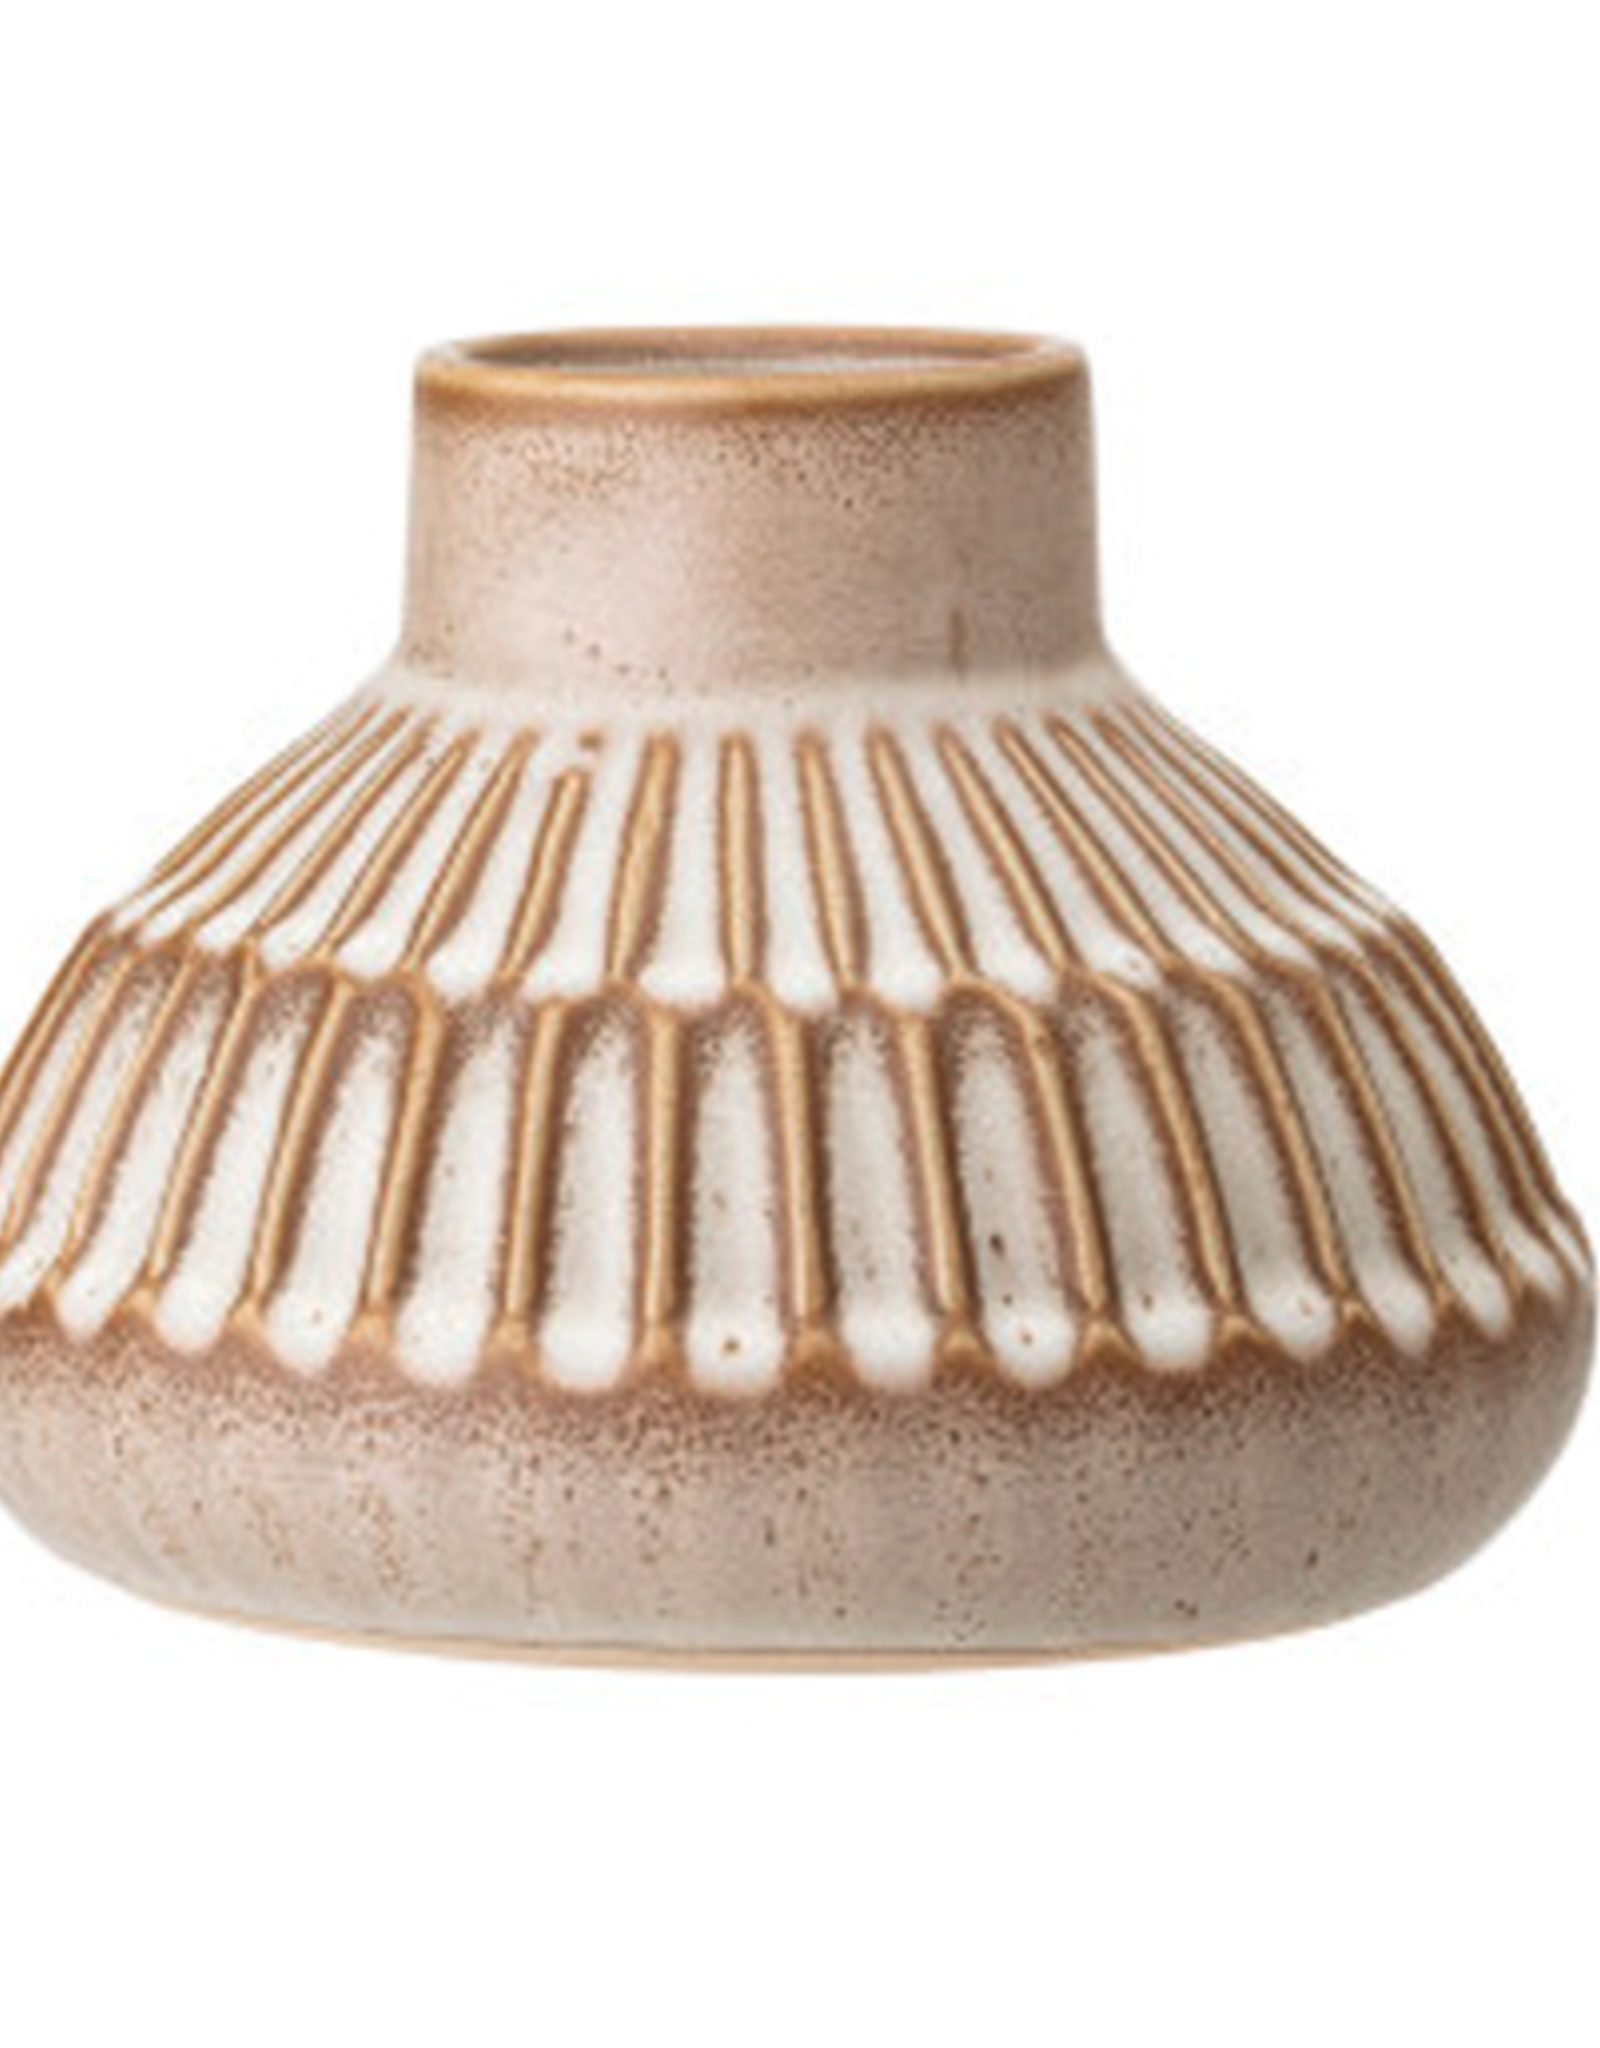 Cream and Brown Reactive Glaze Stoneware Vase D6" H4.5"